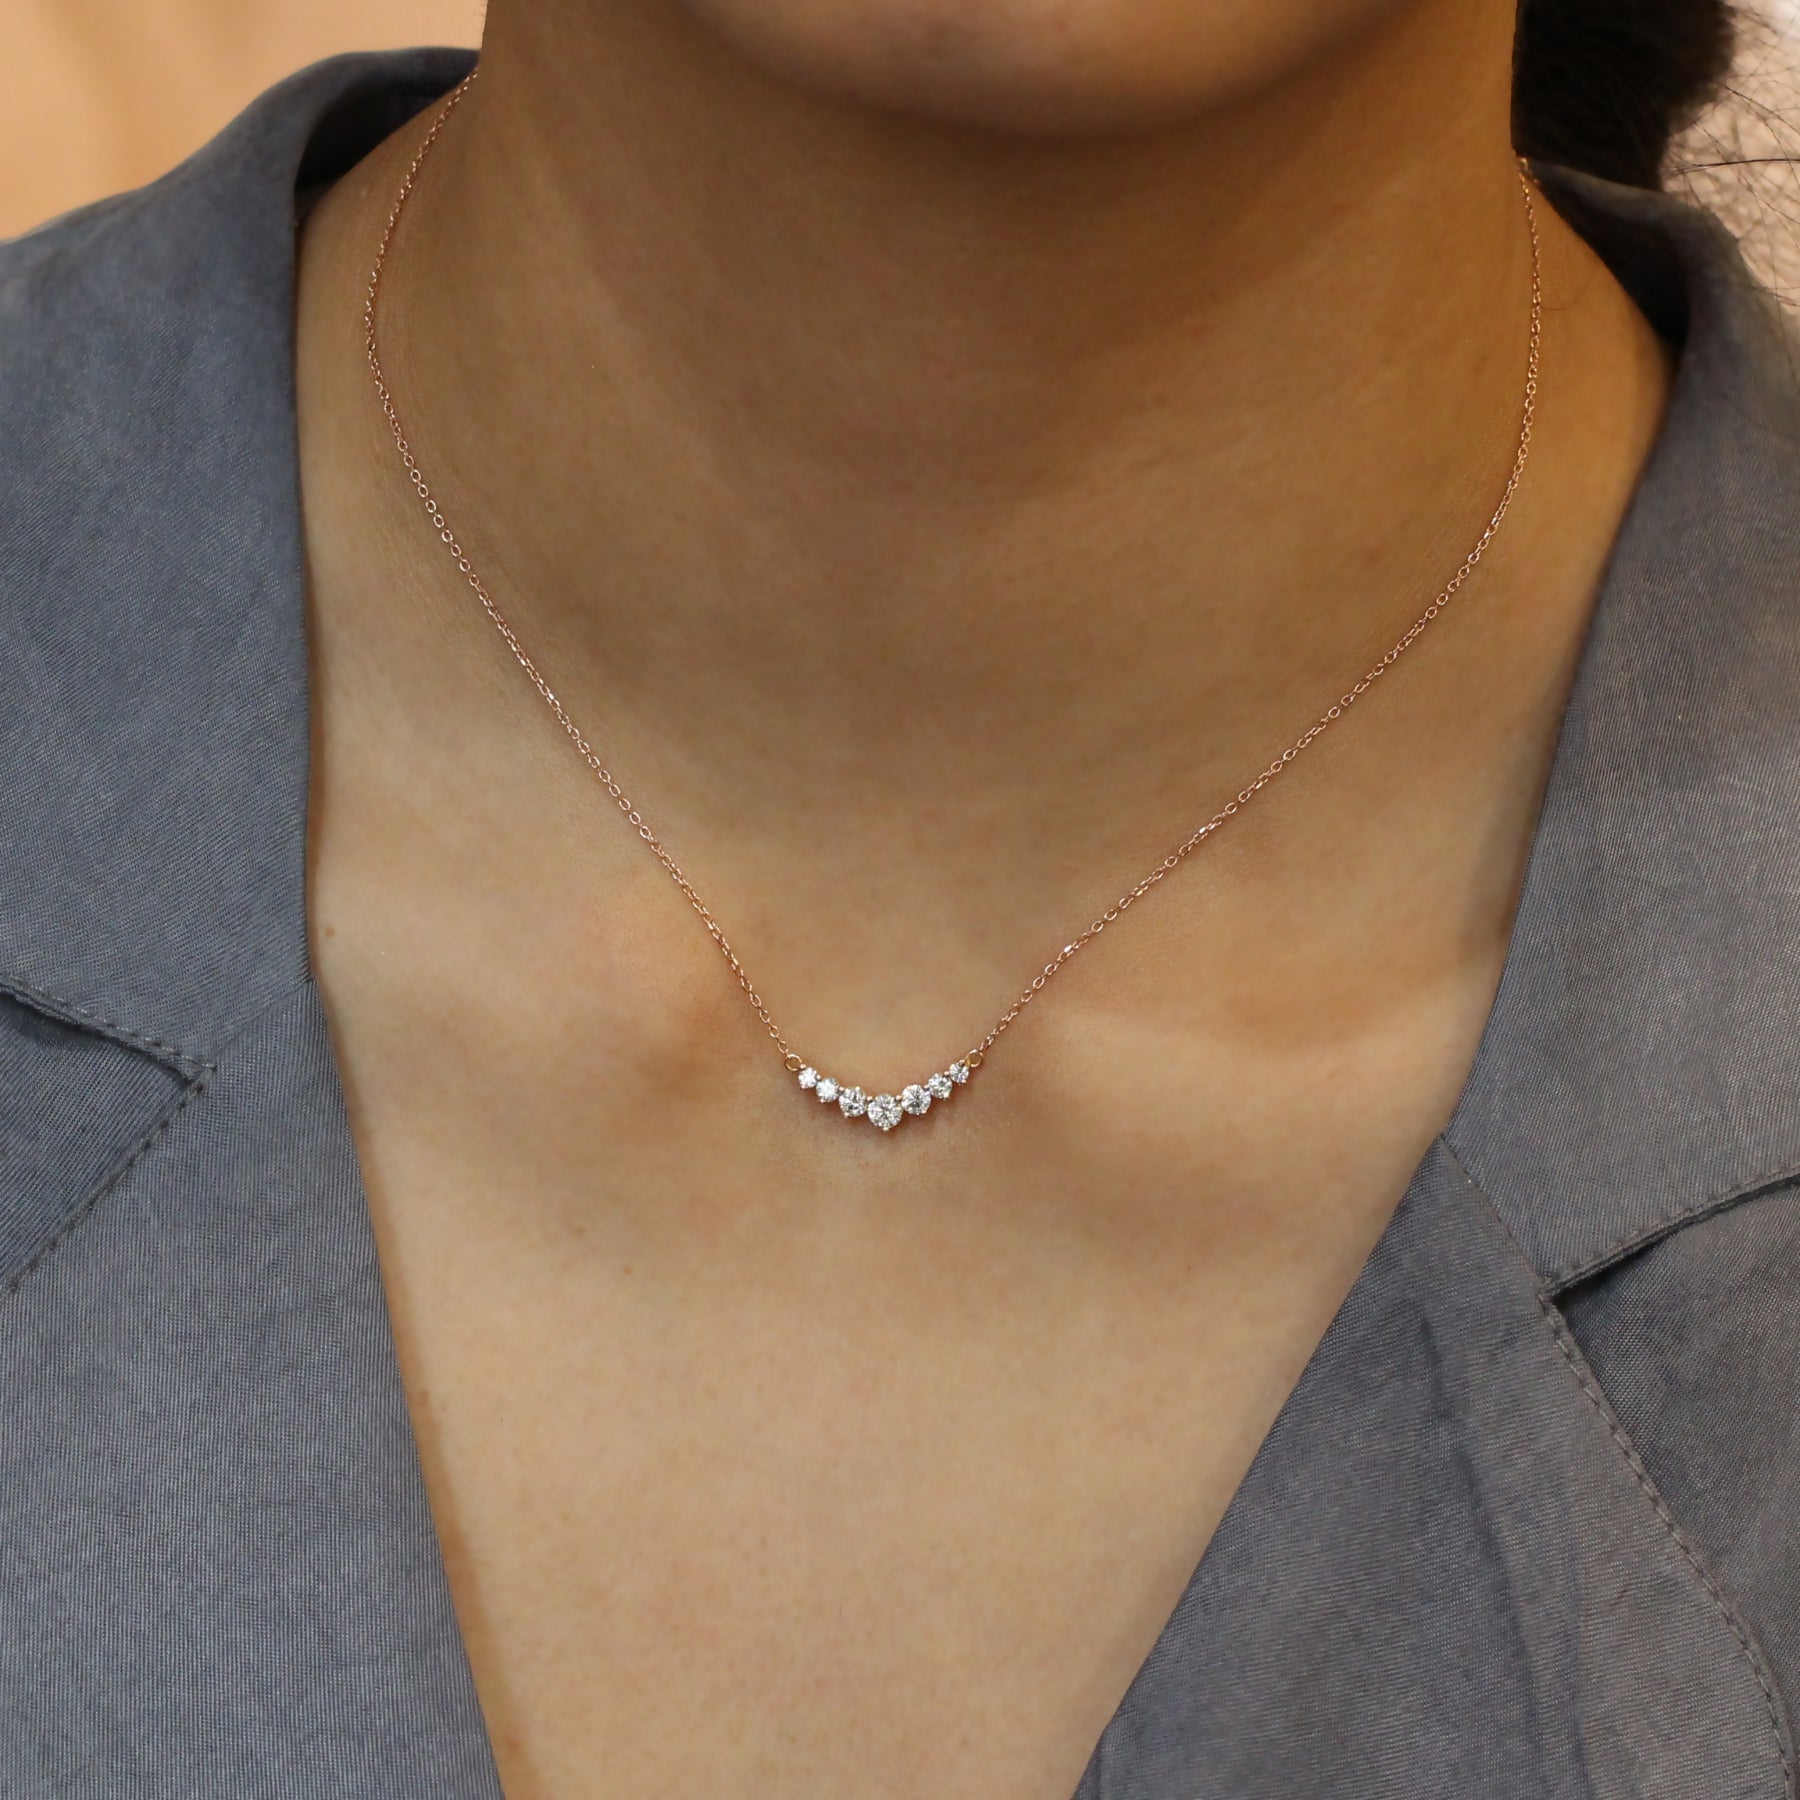 Large 7 diamond necklace rose gold drop pendant la more design jewelry